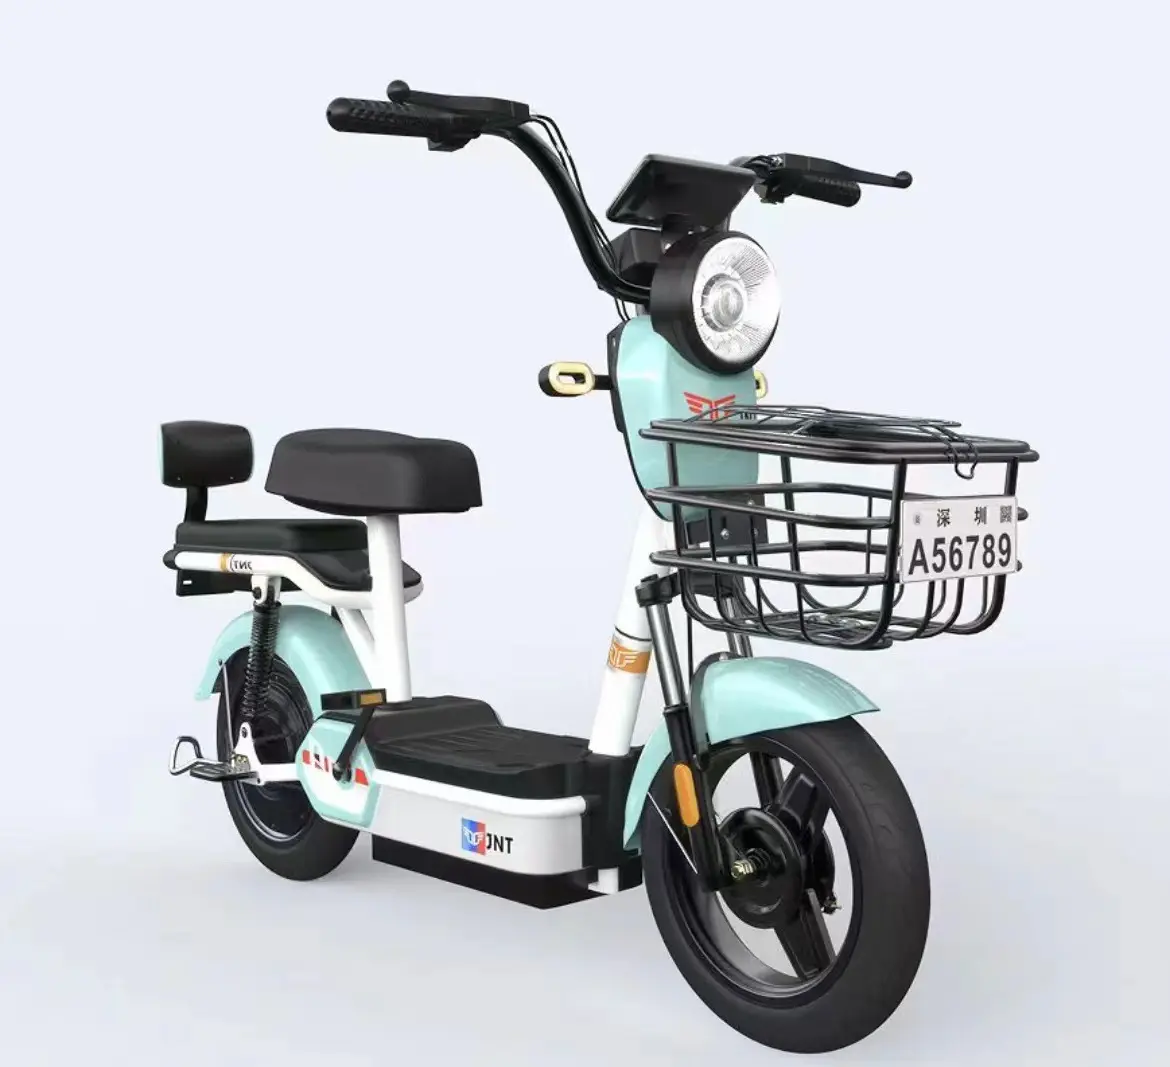 Sepeda motor Moped e-scooter China, kecepatan tinggi lebih murah daya Super 1200W 2000W untuk dewasa